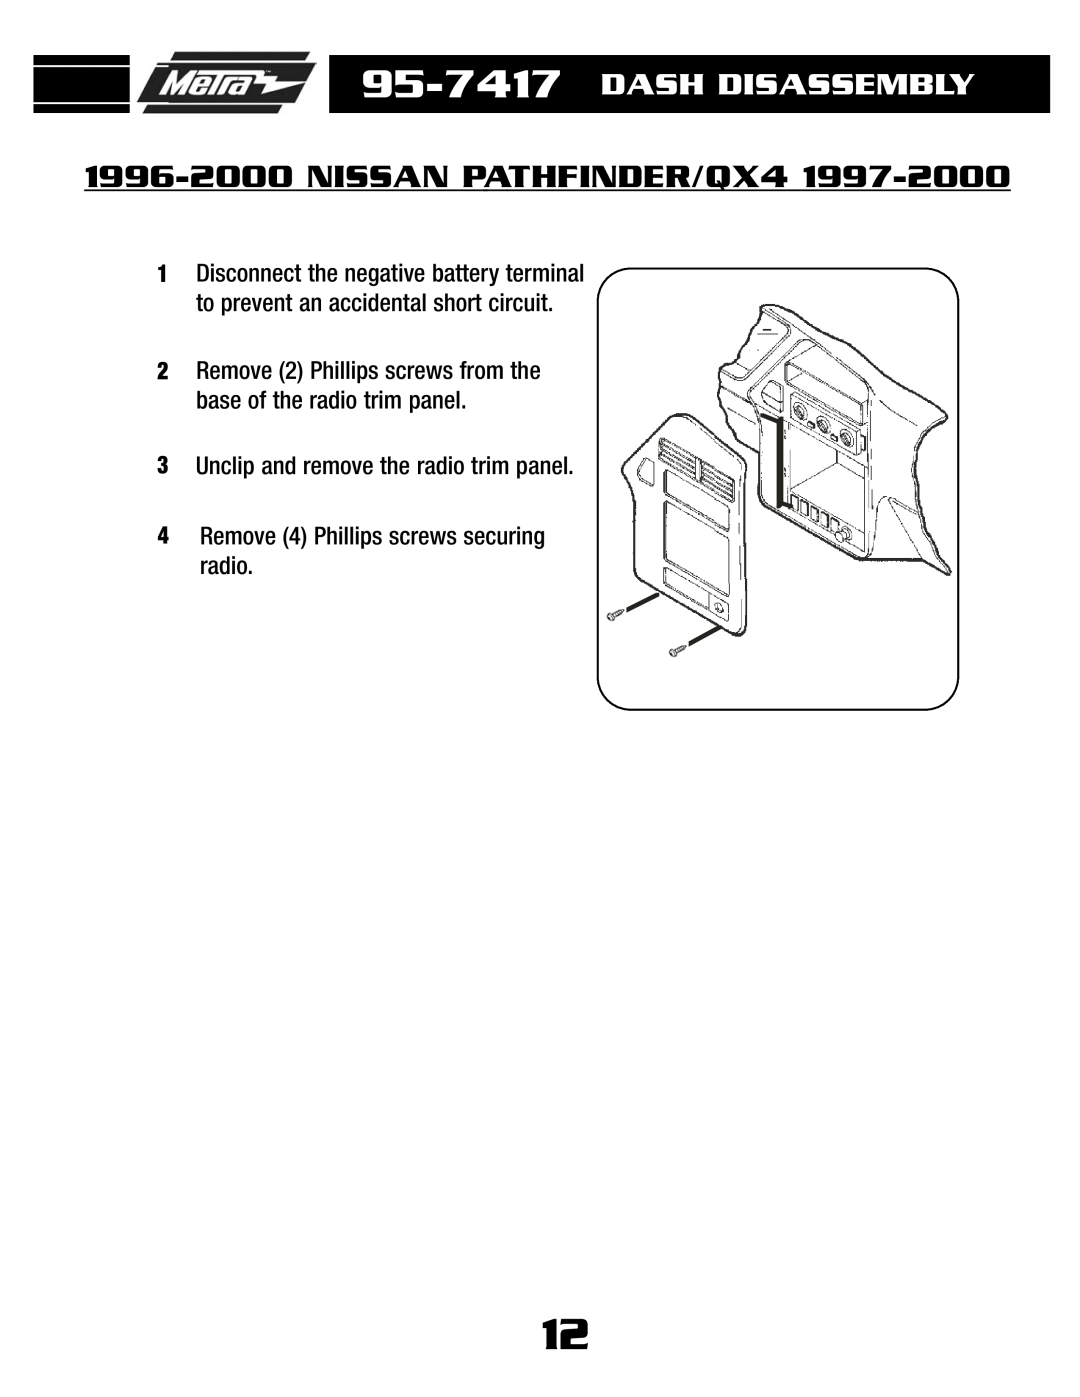 Metra Electronics 95-7417 1996-2000NISSAN PATHFINDER/QX4, 4Remove 4 Phillips screws securing radio, Dash Disassembly 